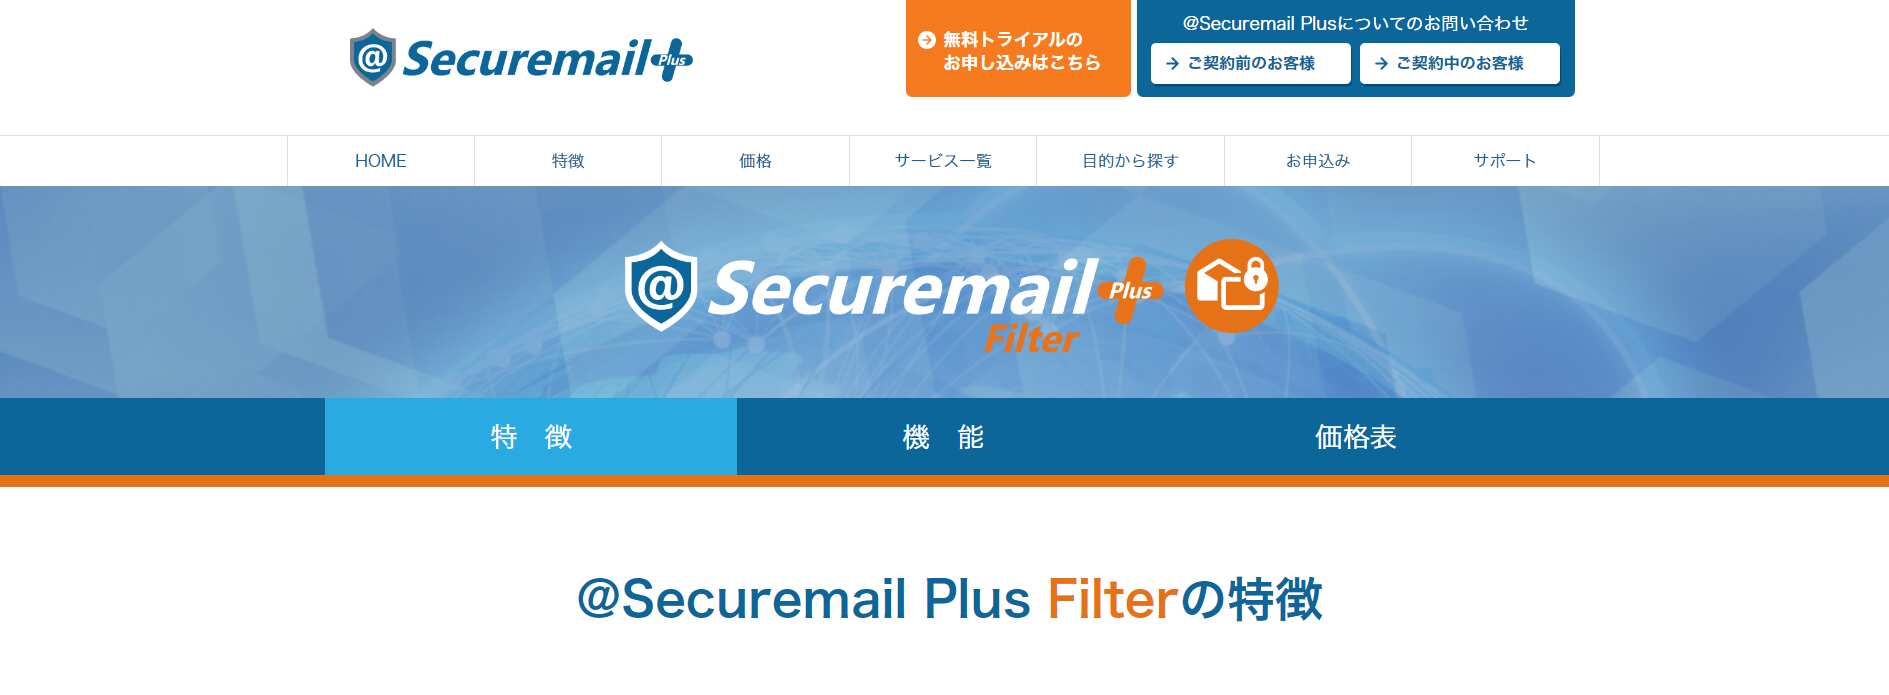 @Securemail Plus Filter